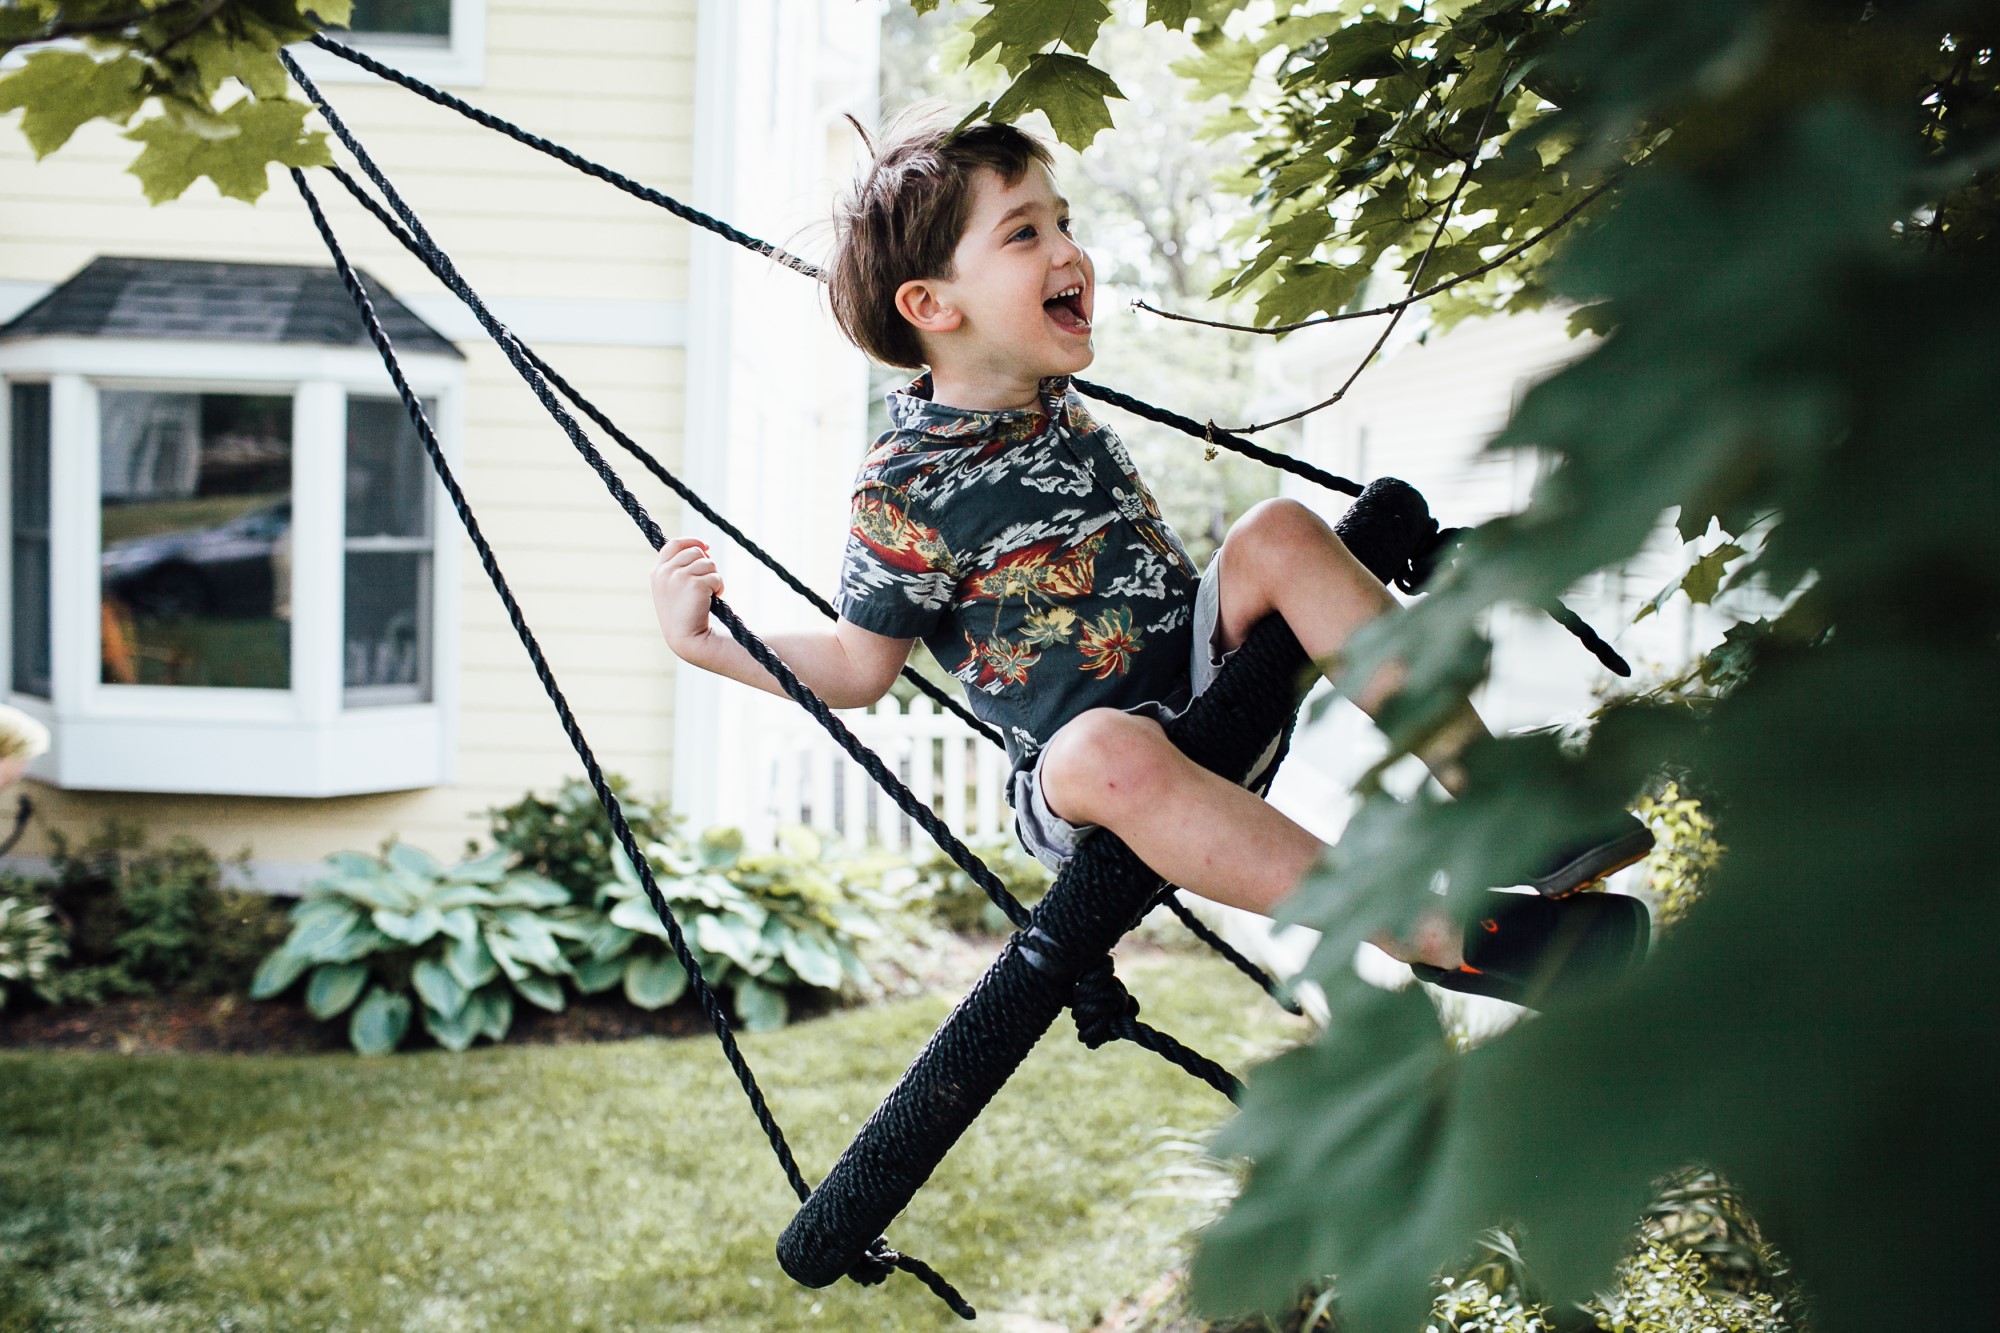 Small boy on swing in yard